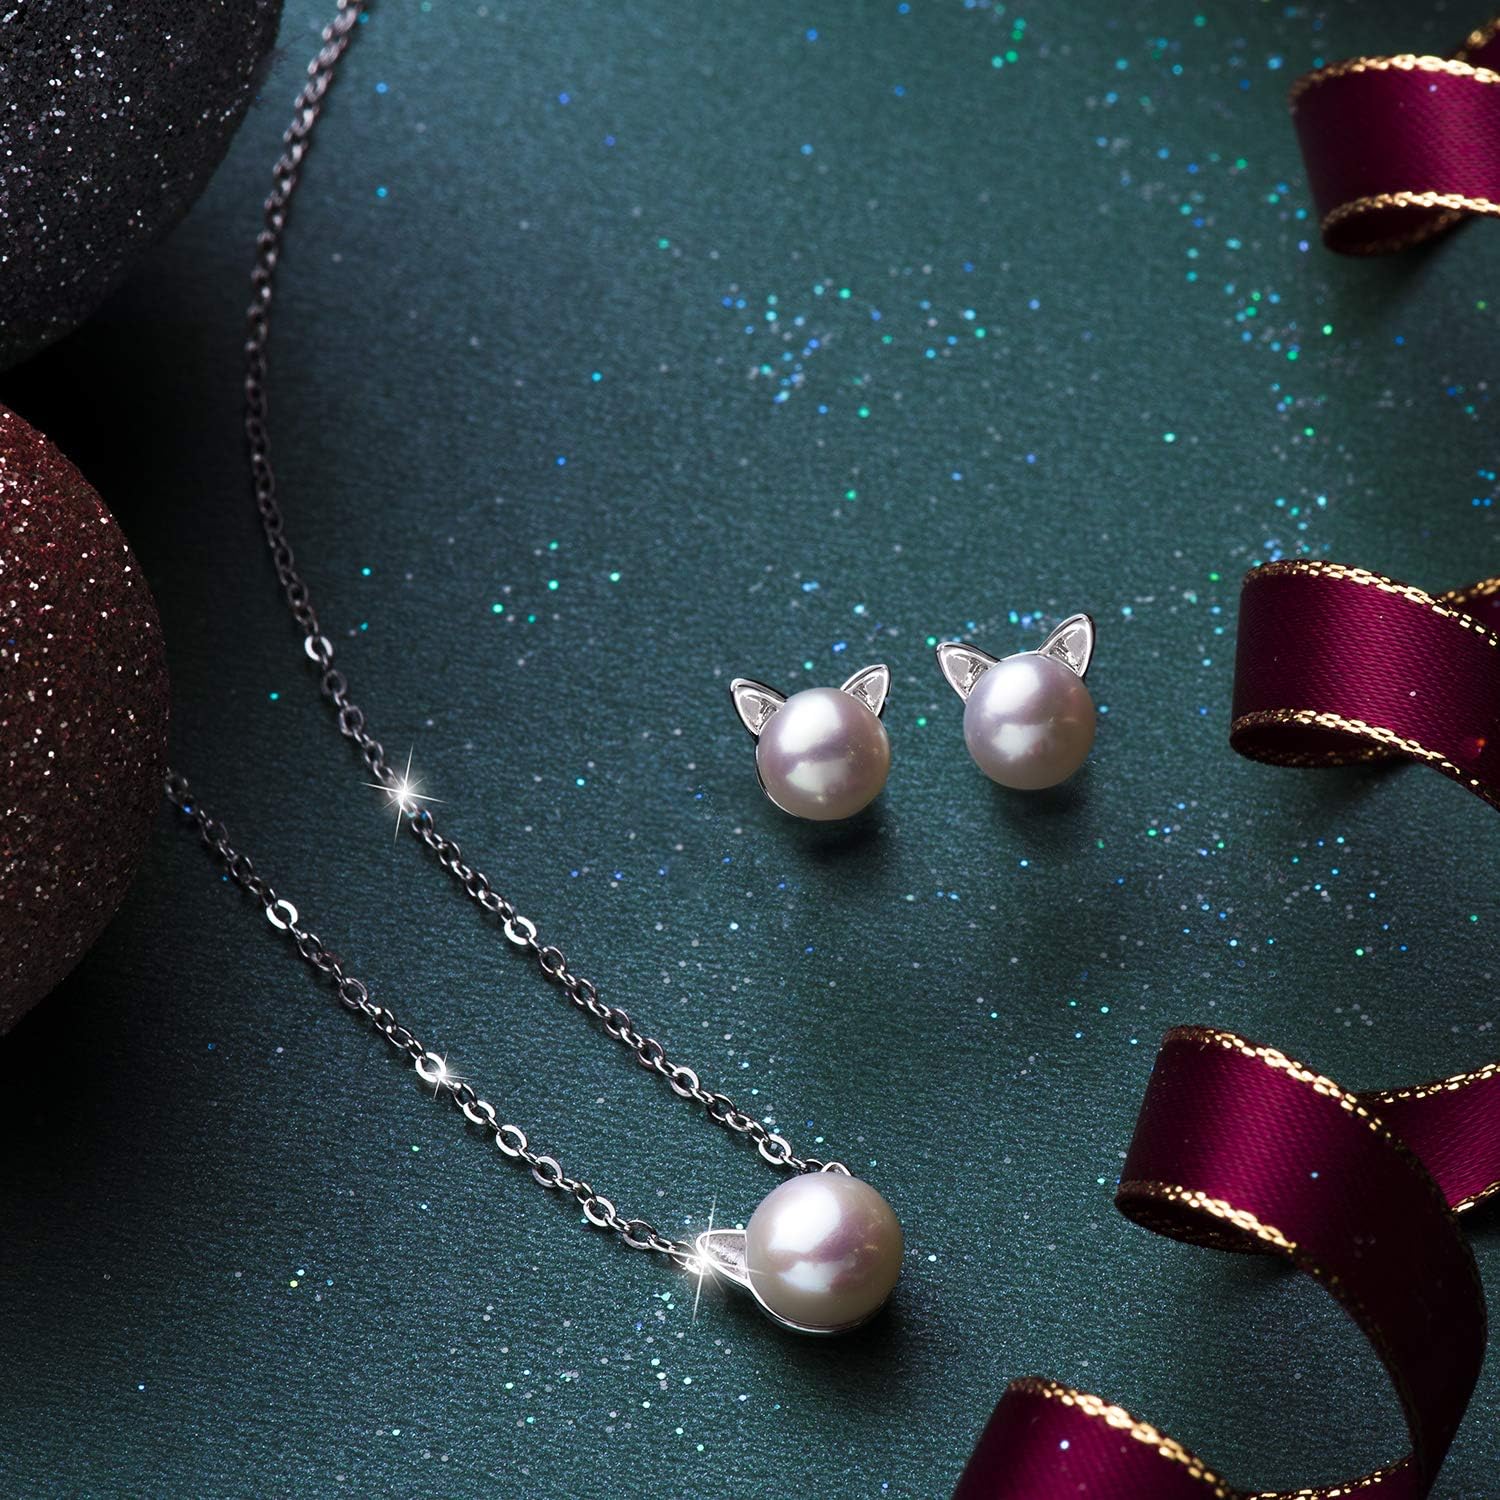 Cat Earrings Pearl Earrings Sterling Silver Earrings for Women Cat Memorial Gifts Cat Gifts for Cat Lovers